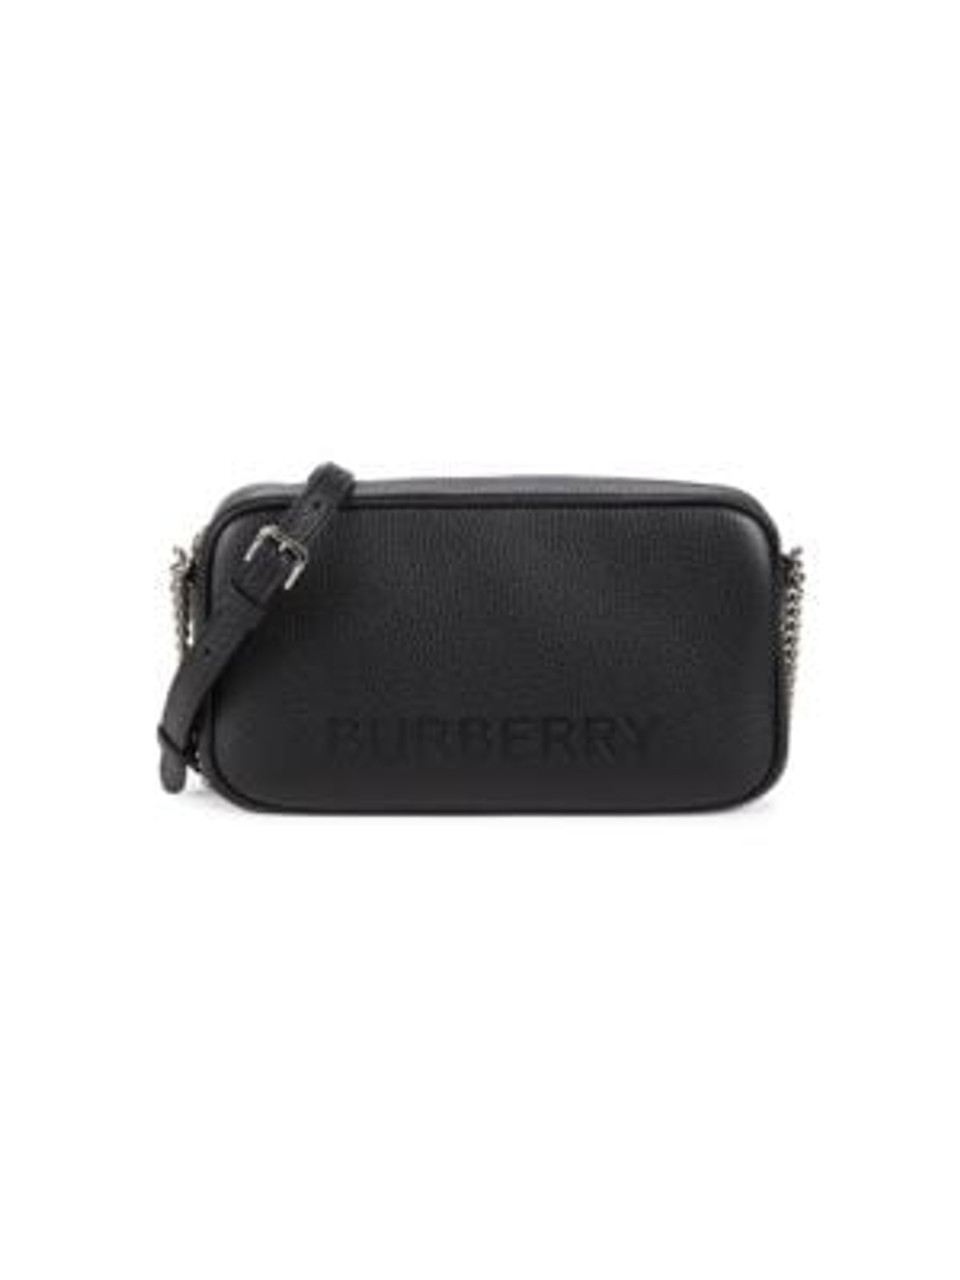 Burberry Black Bags & Handbags for Women | Authenticity Guaranteed | eBay